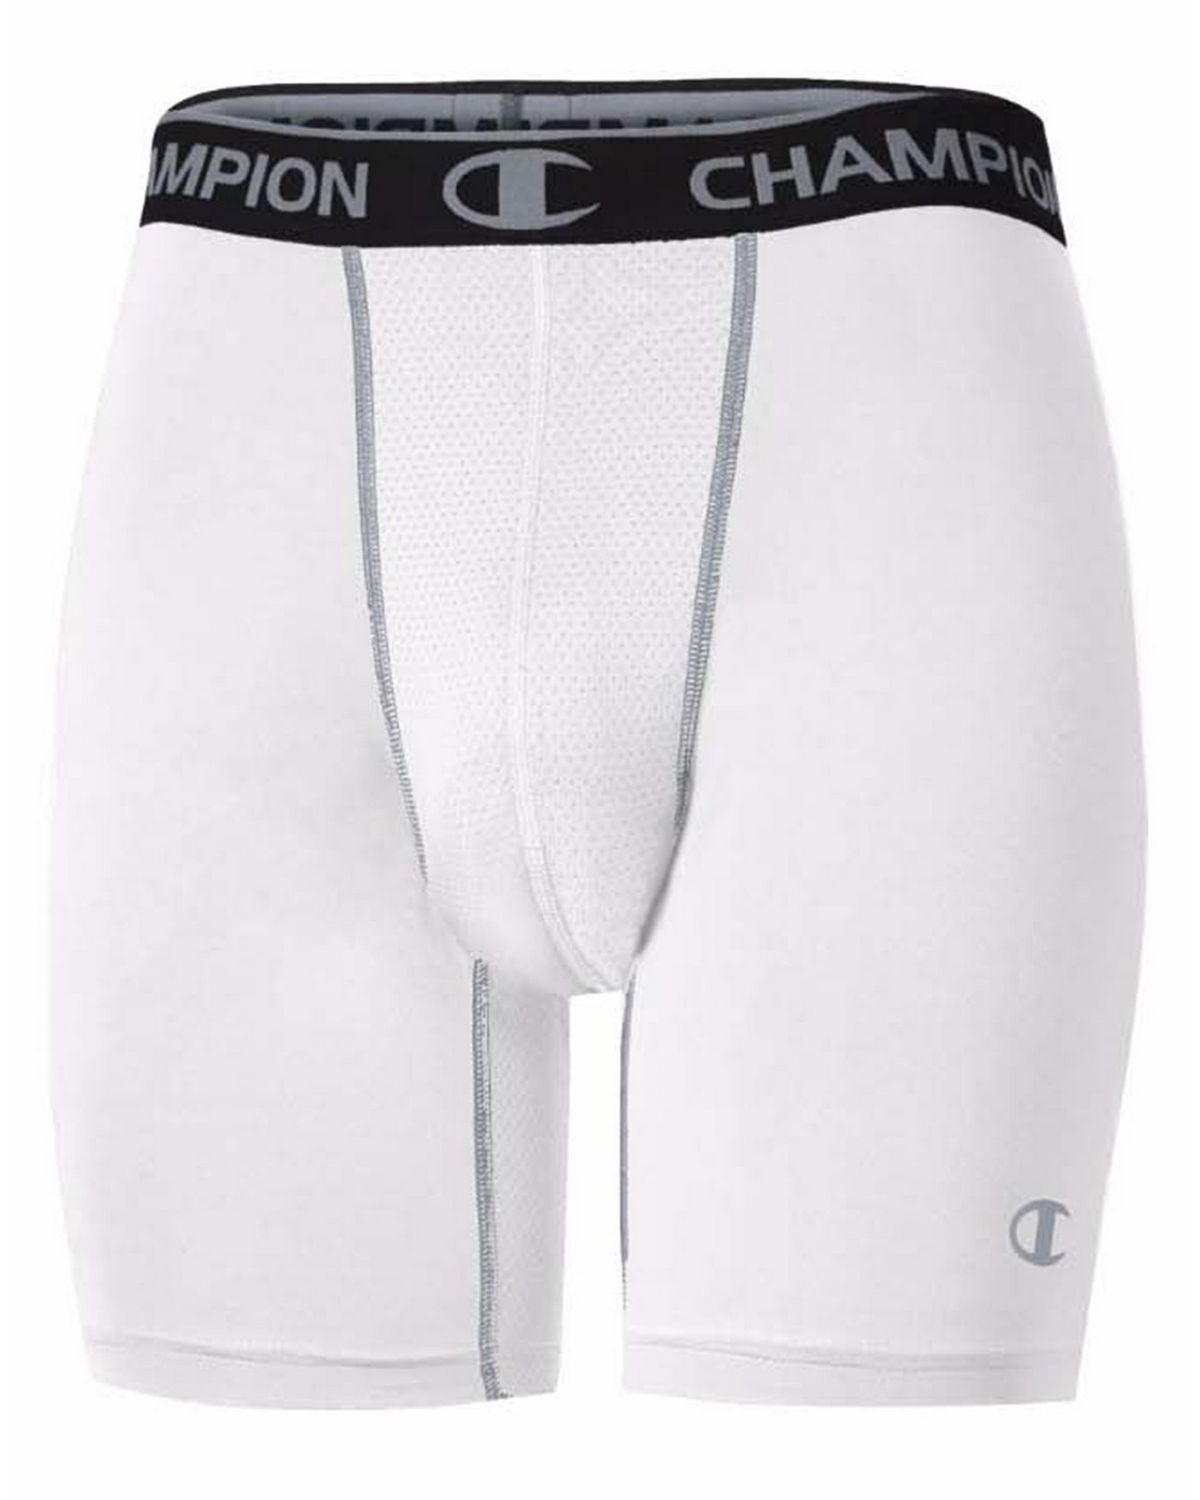 Champion Compression Shorts Size Chart